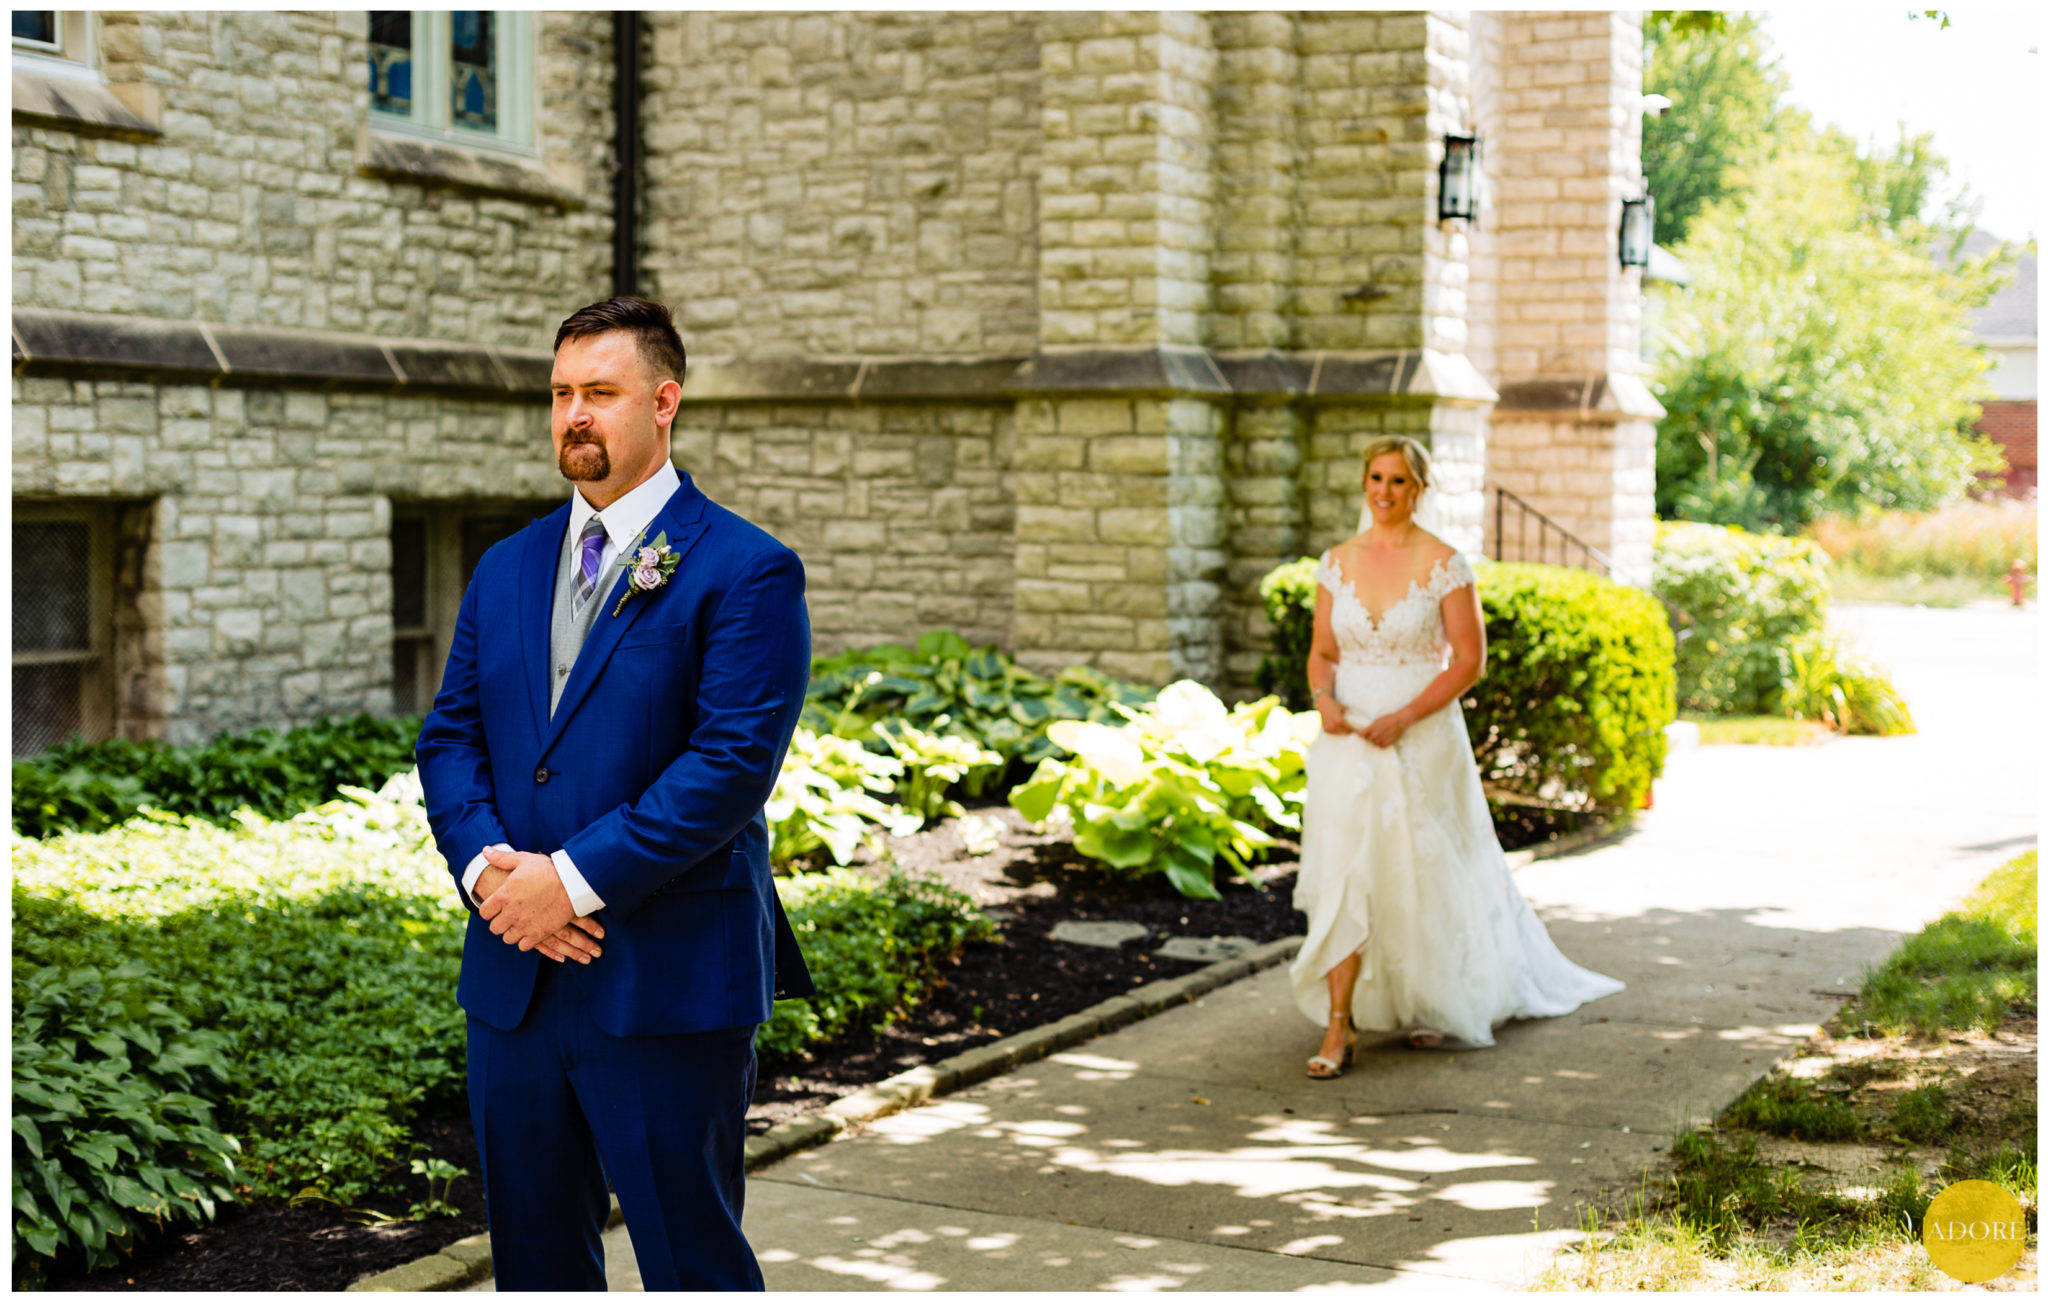 Gretchen + Jared // Summer Ceremony at St. Marks // Toledo Ohio | Adore Wedding Photography Blog